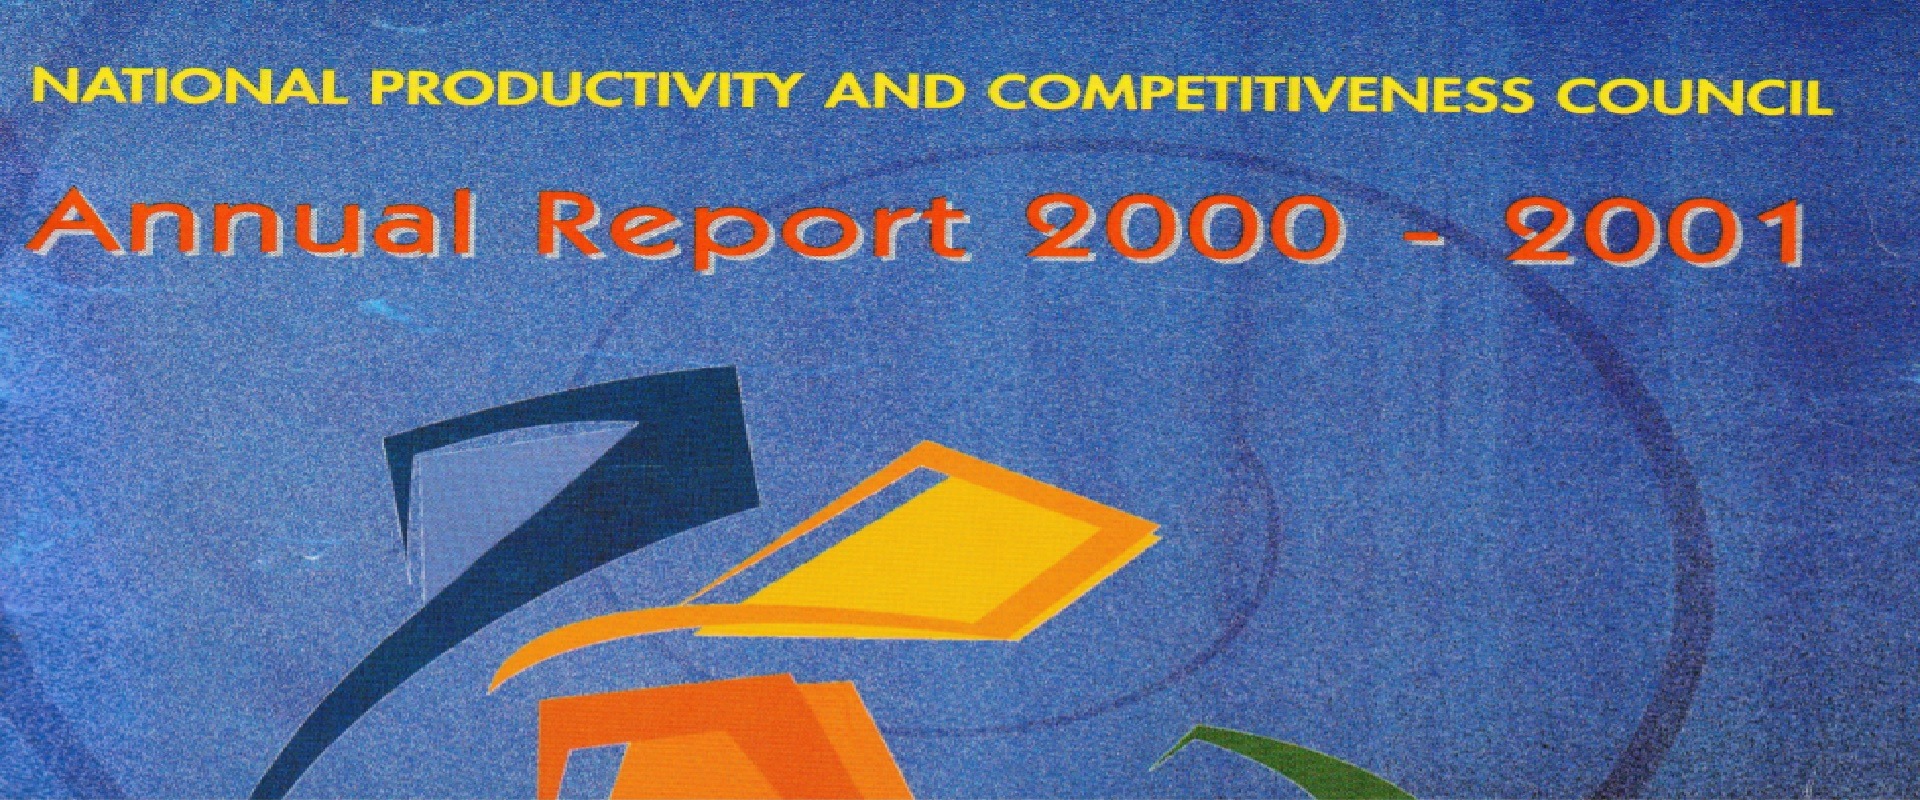 Annual Report 2000 - 2001